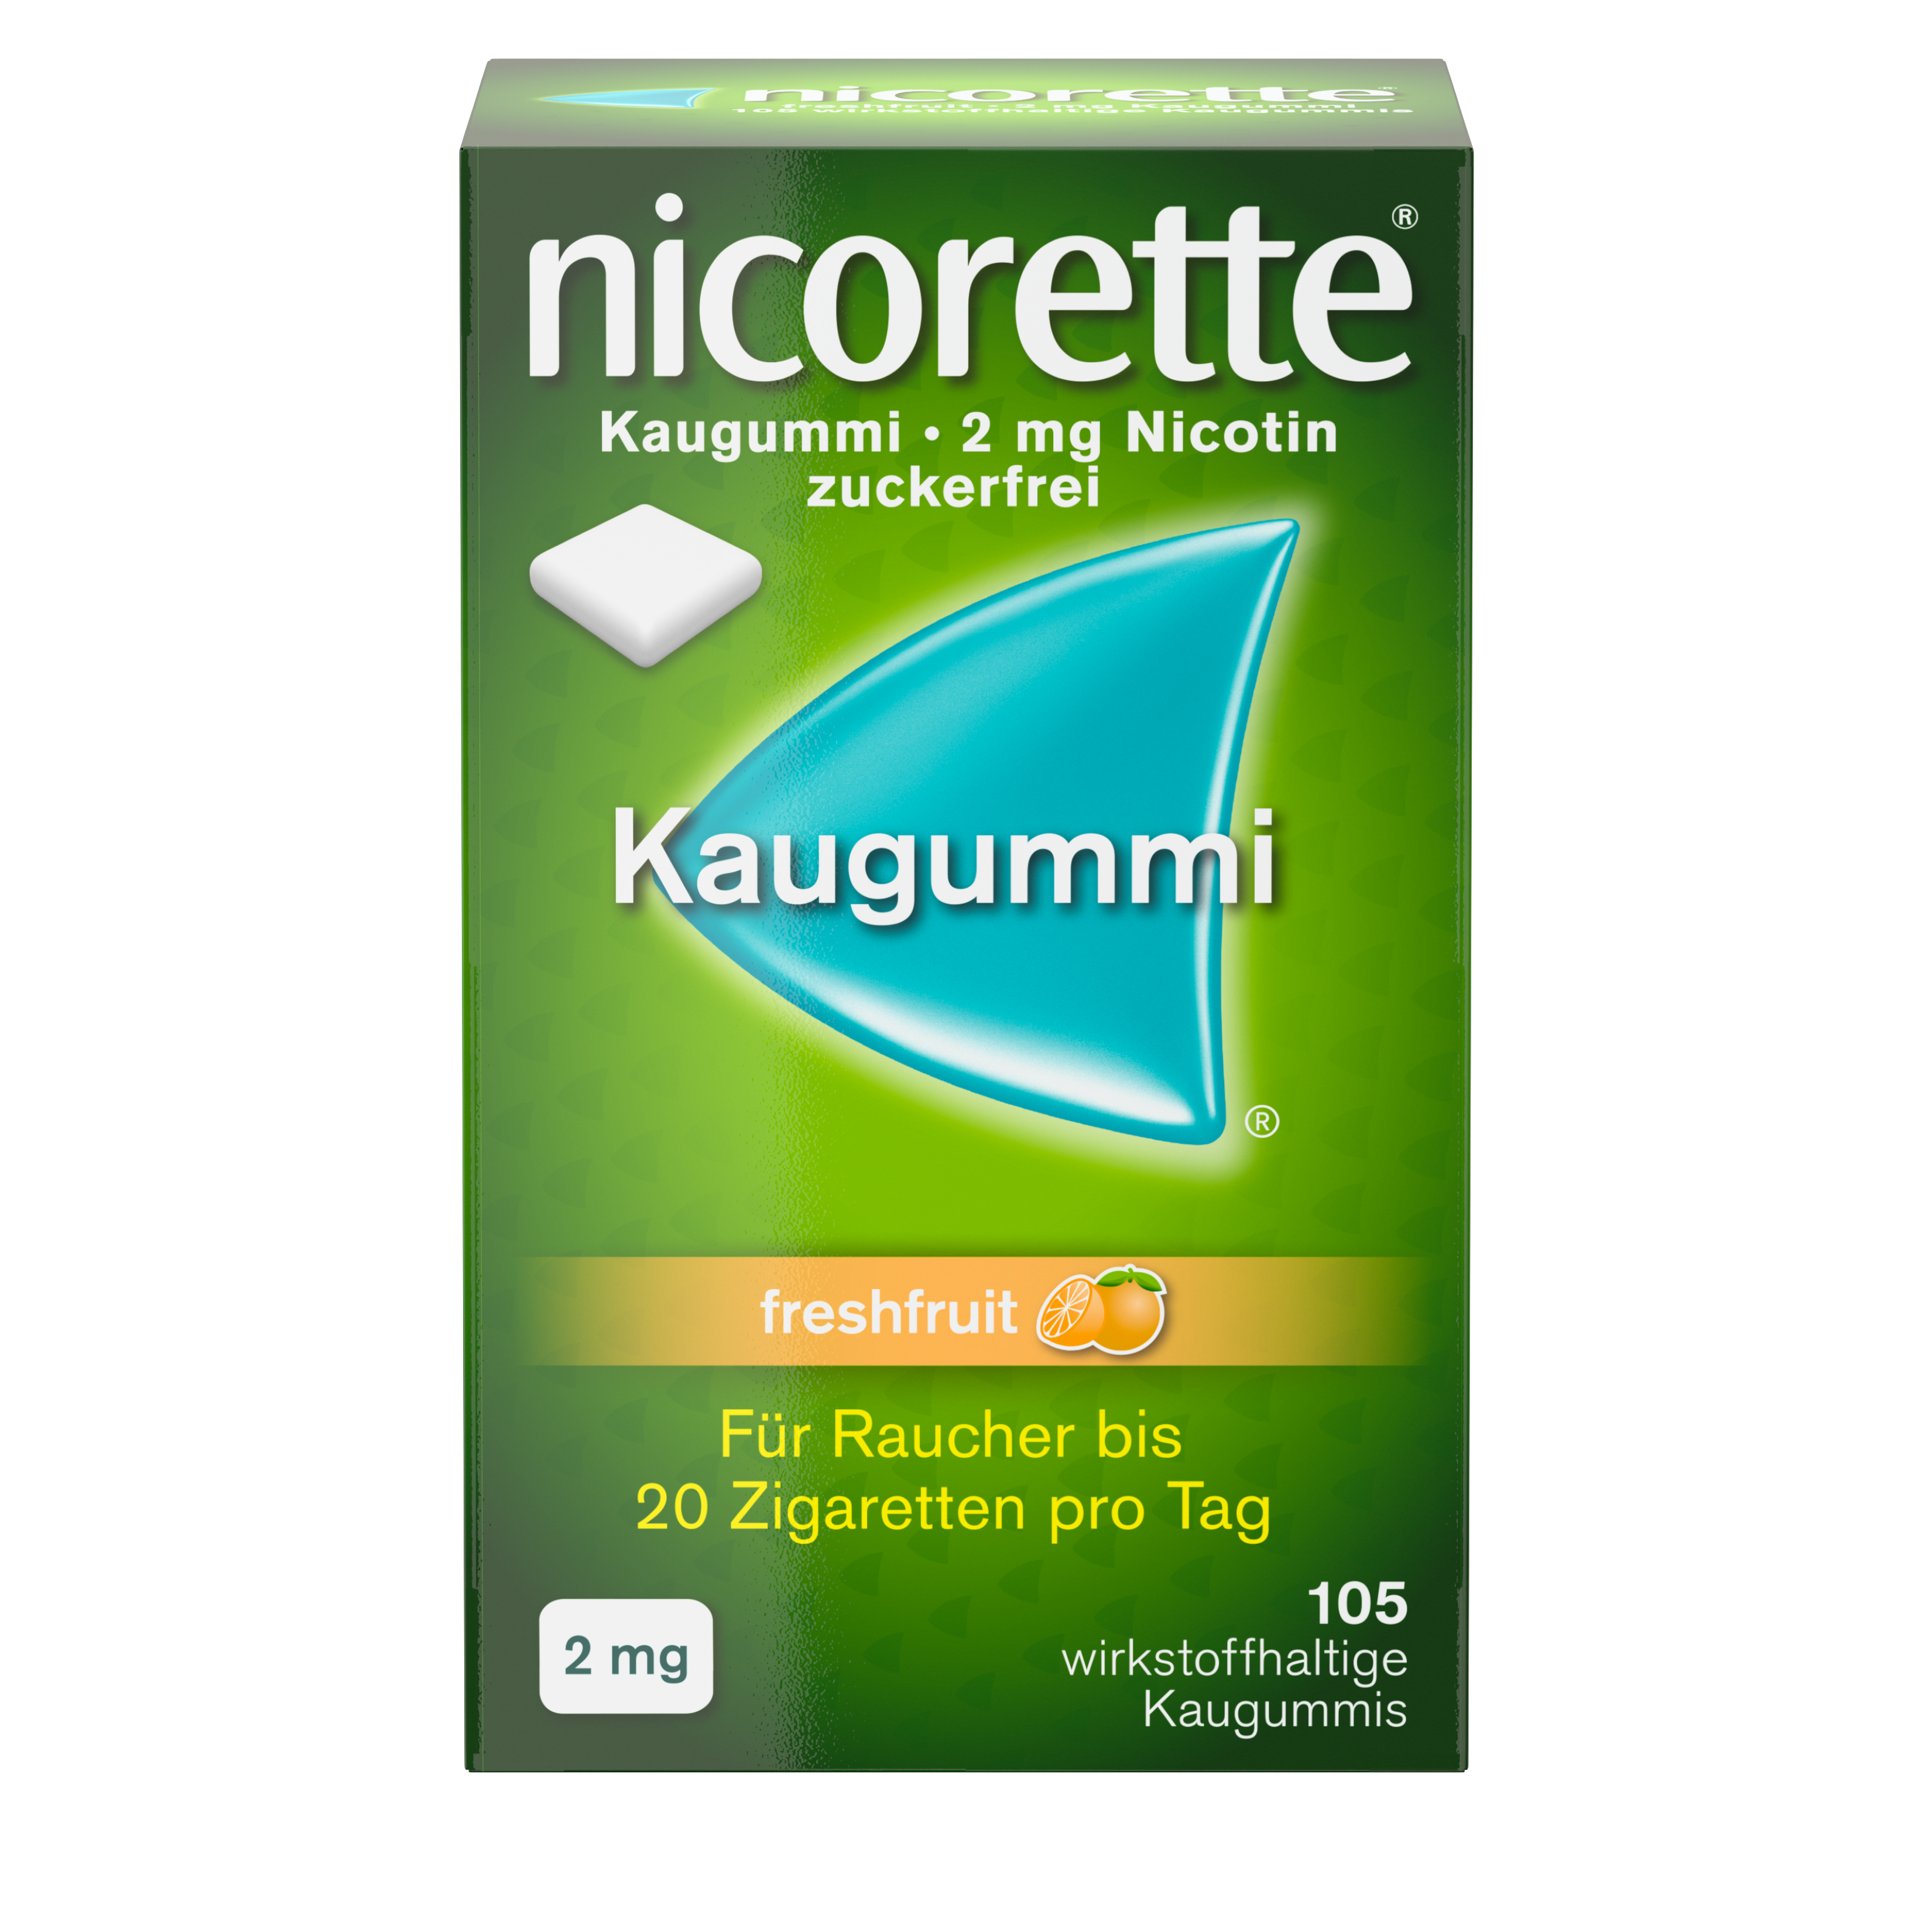 Nicorette Freshfruit 2 mg - Kaugummi zur Raucherentwöhnung